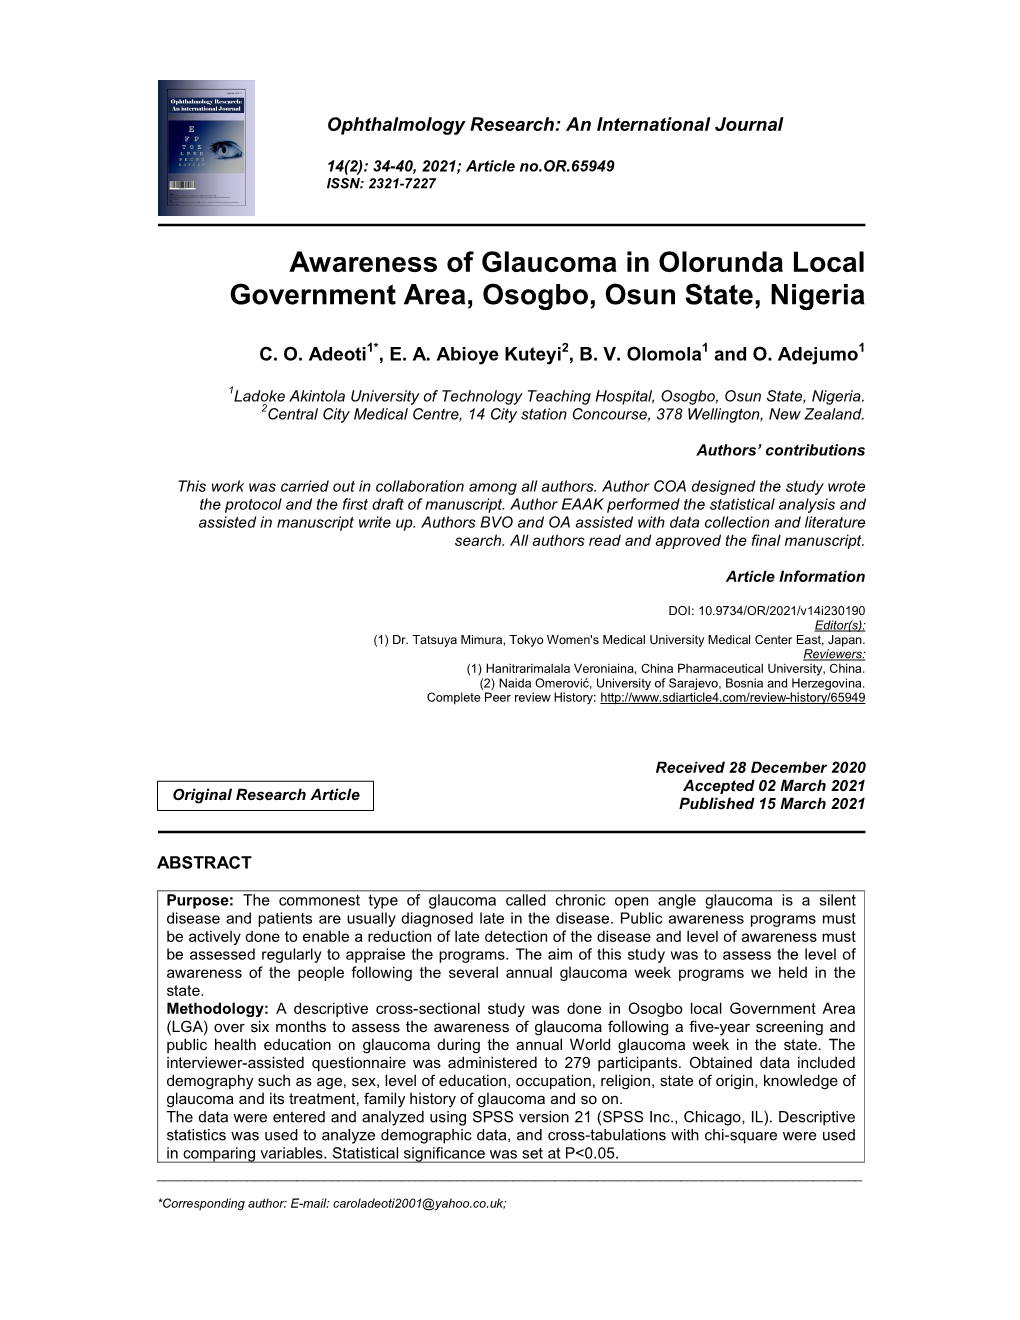 Awareness of Glaucoma in Olorunda Local Government Area, Osogbo, Osun State, Nigeria